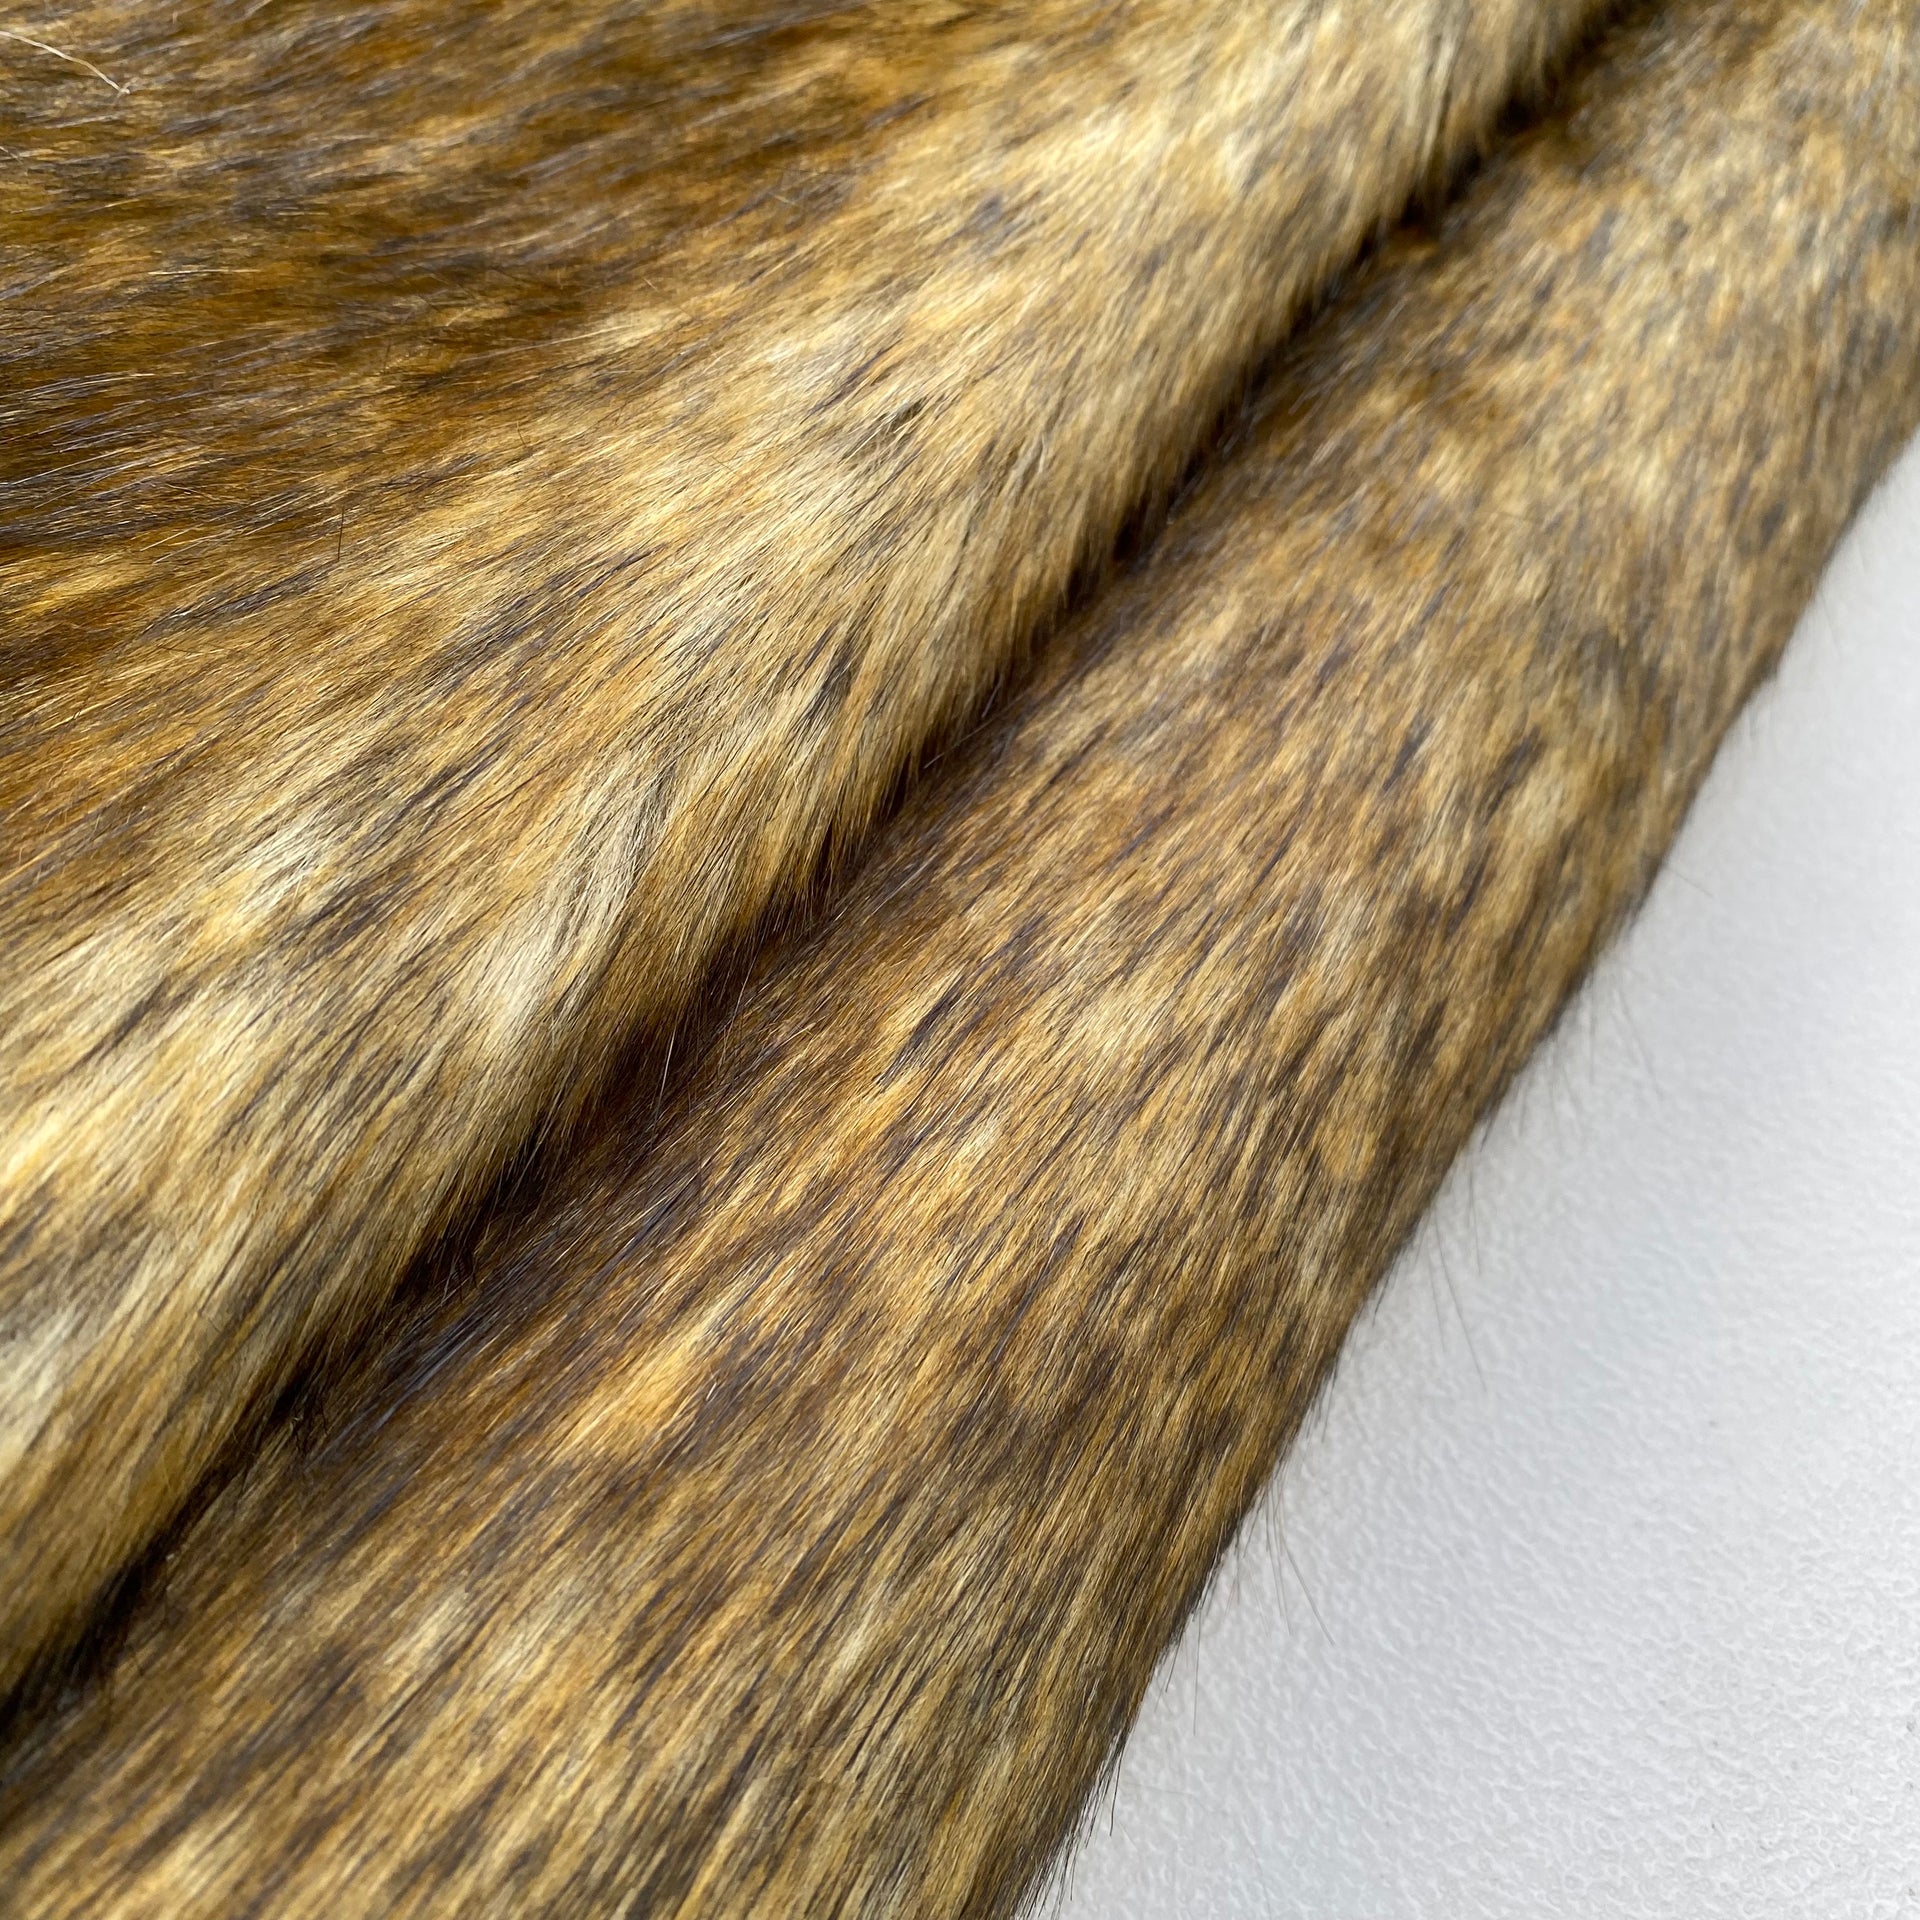 WOLVERINE - Luxury Faux Fur - Late 2021 Range